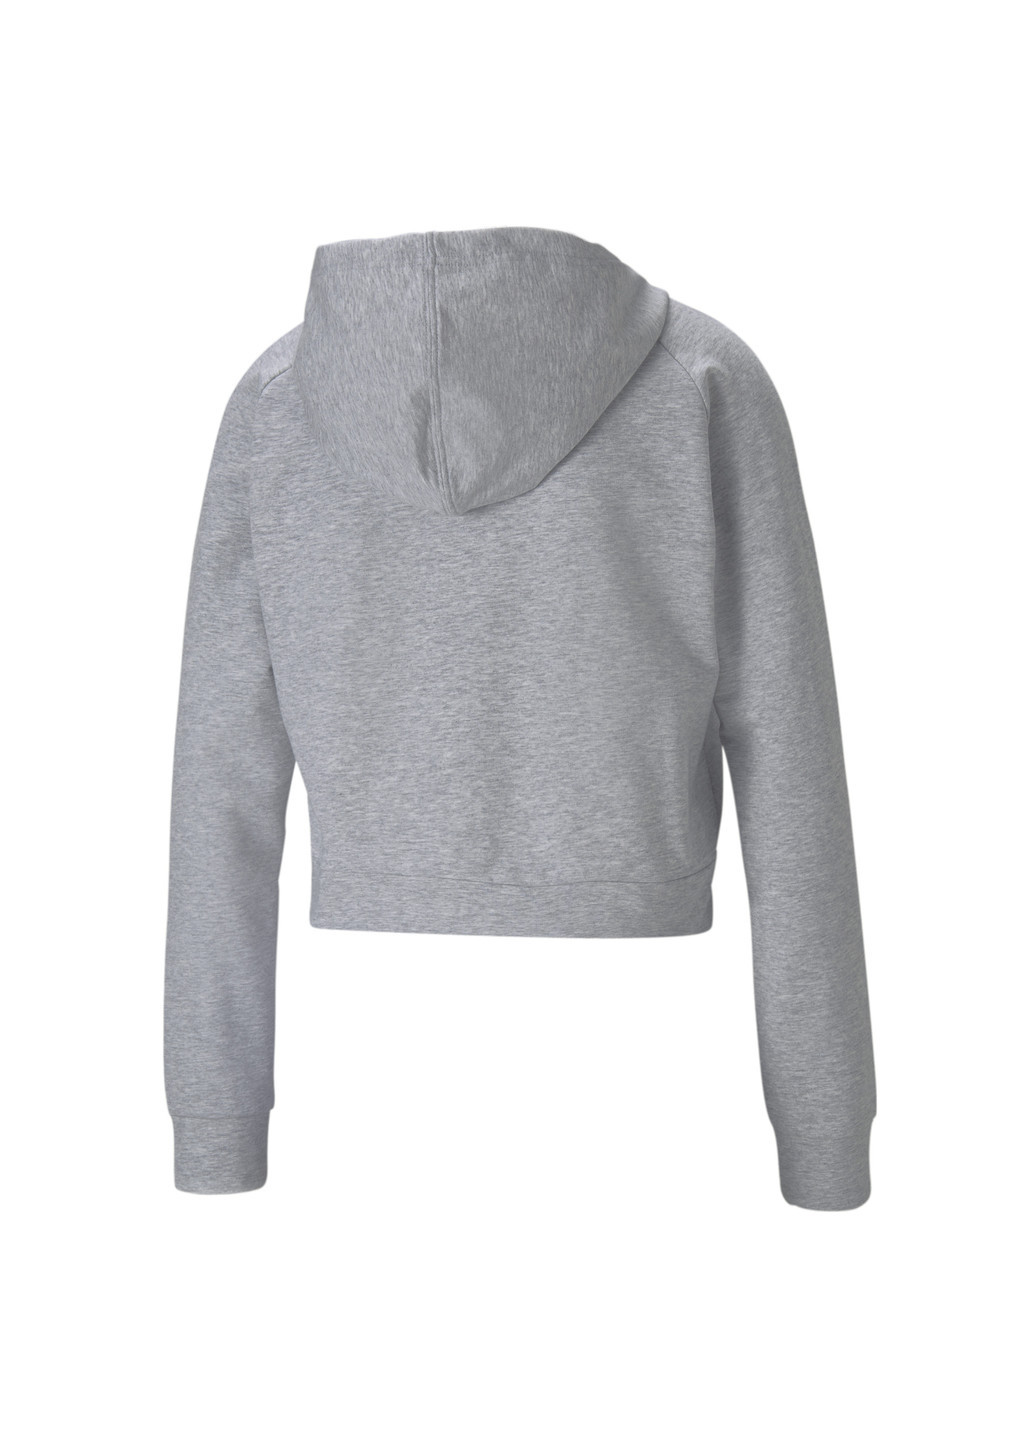 Сіра спортивна толстовка rtg full-zip women's hoodie Puma однотонна